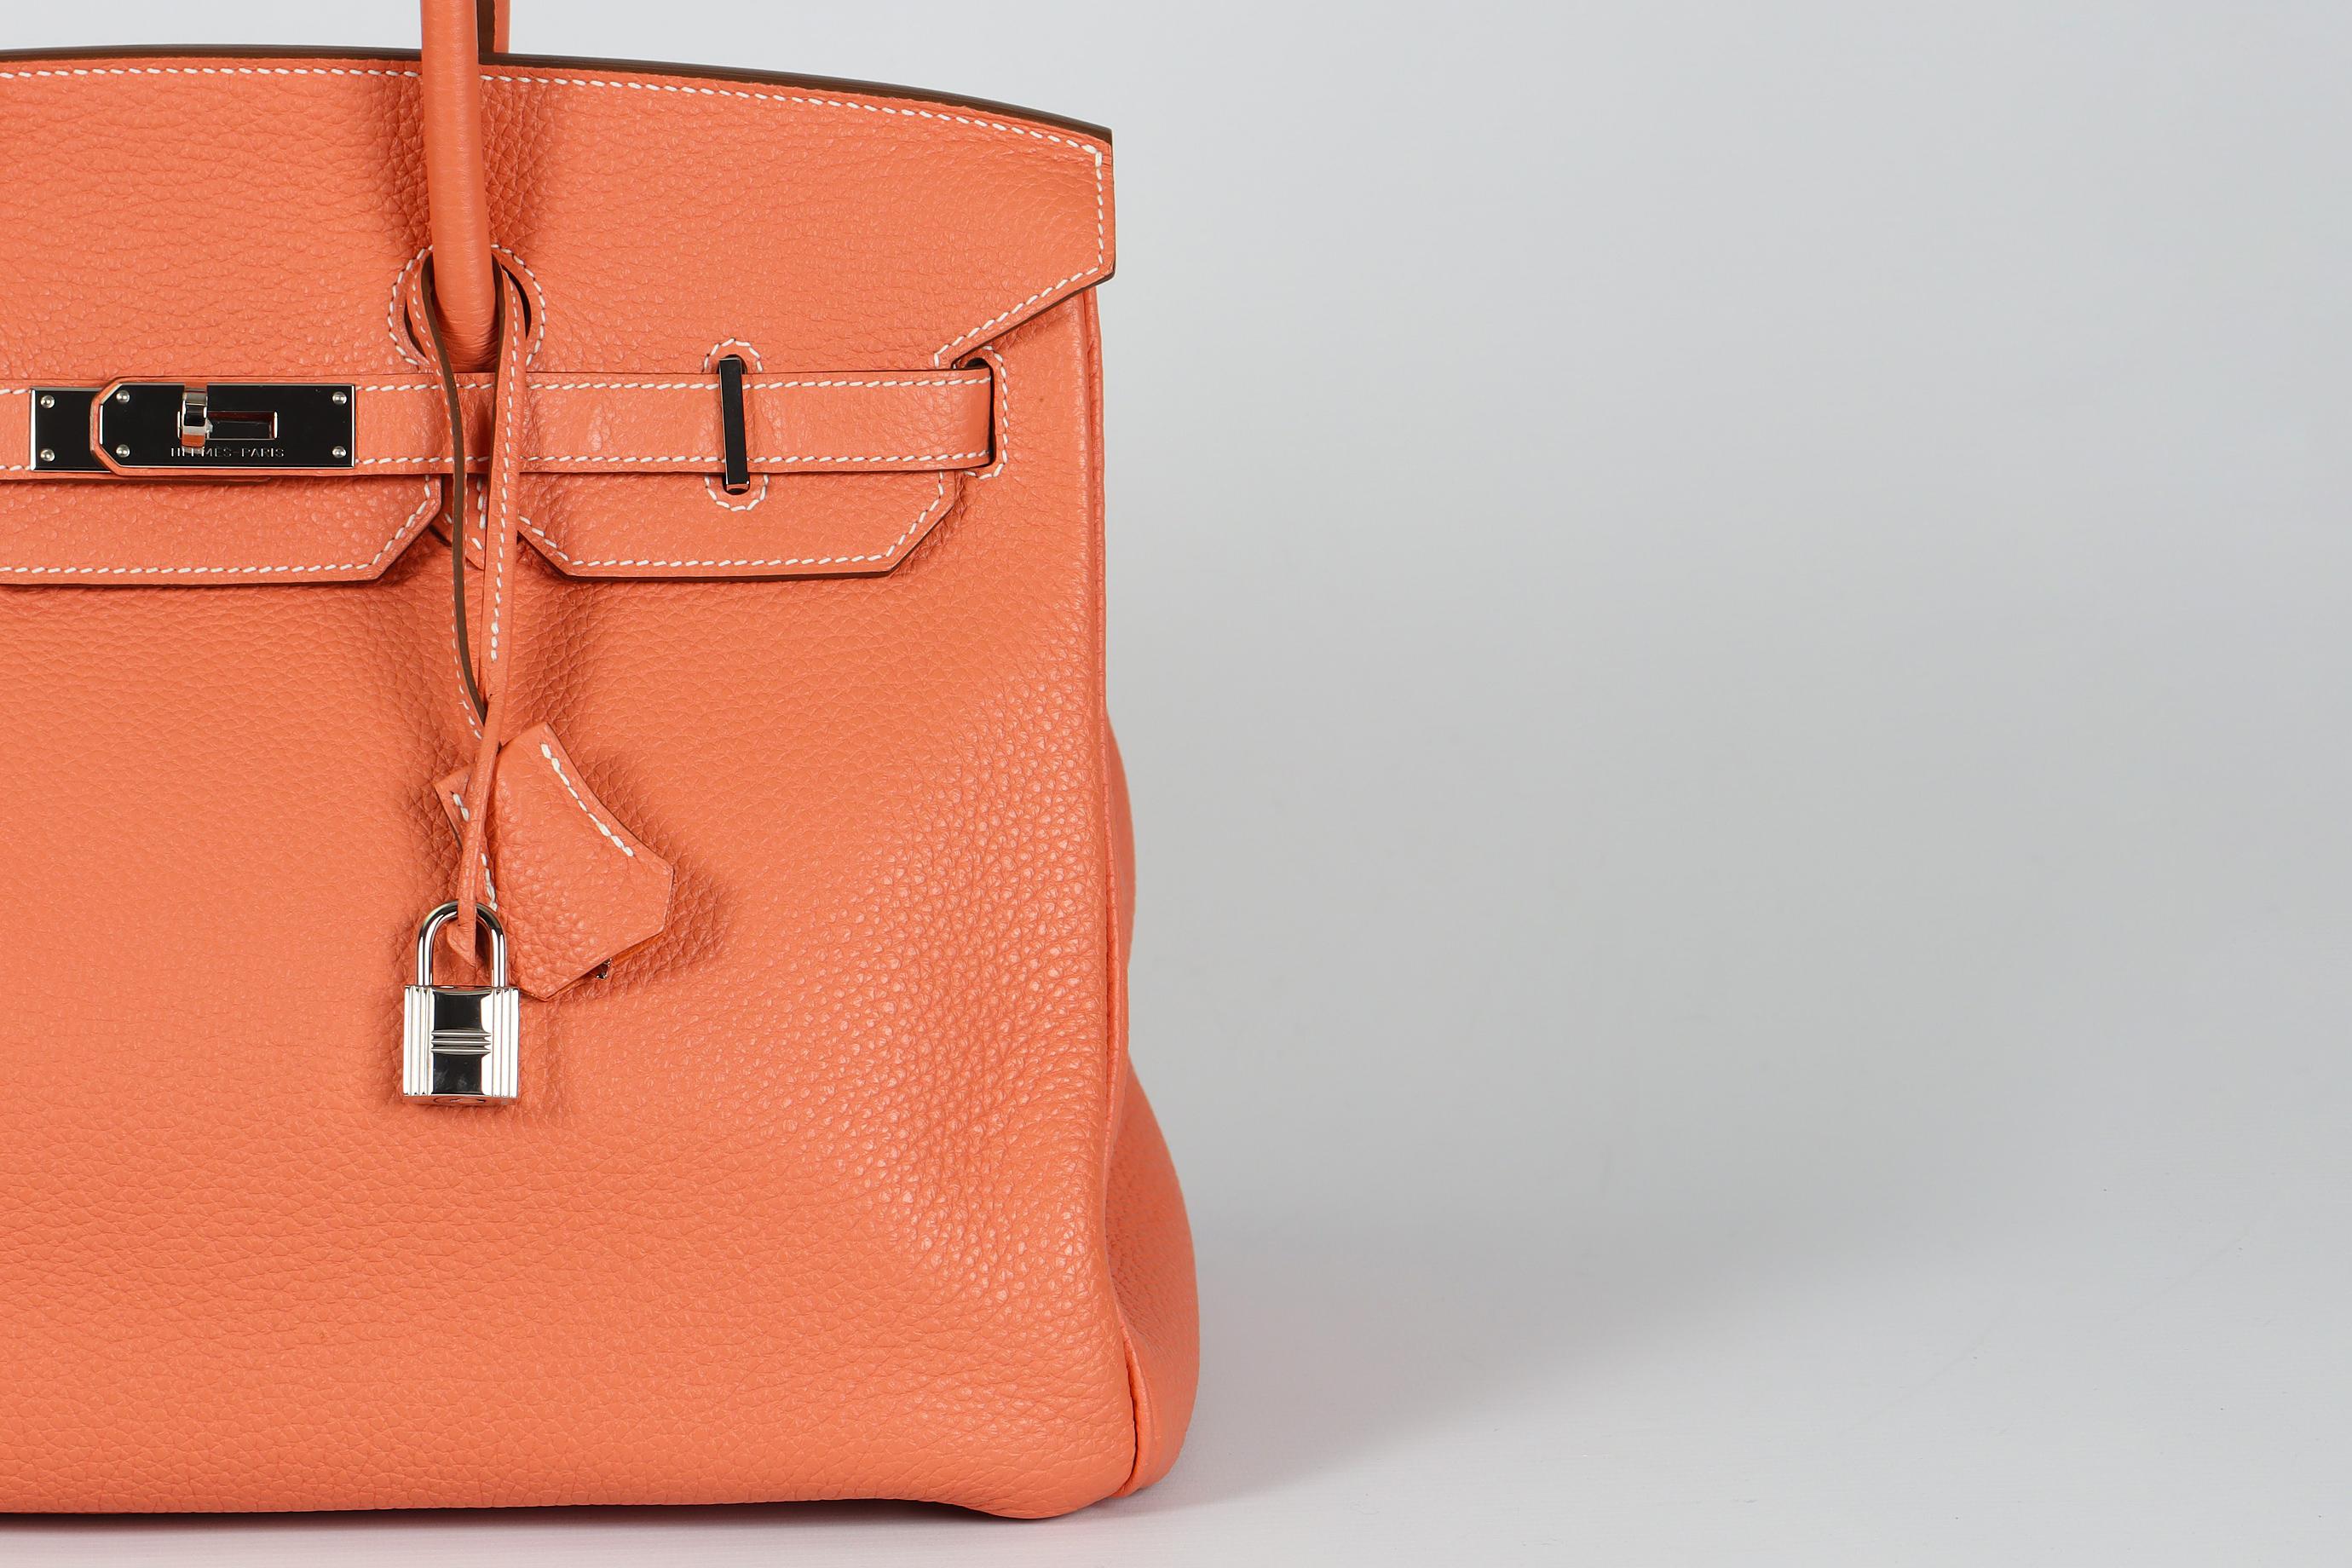 Hermès 2013 Birkin 35cm Clemence Leather Bag For Sale 9